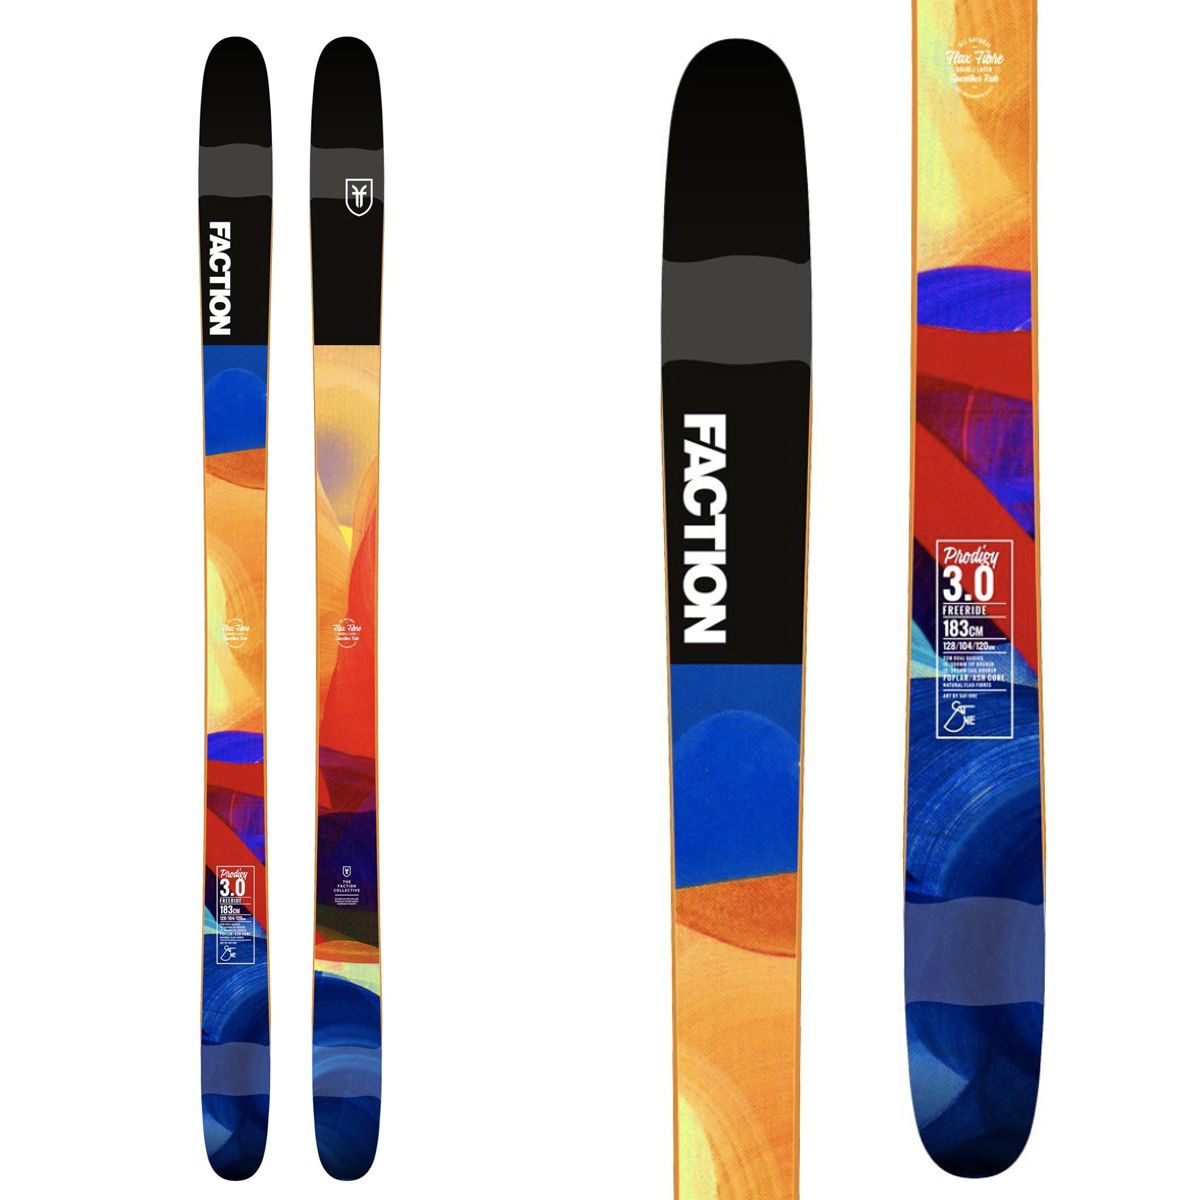 Ski Faction Prodigy 3.0 2019